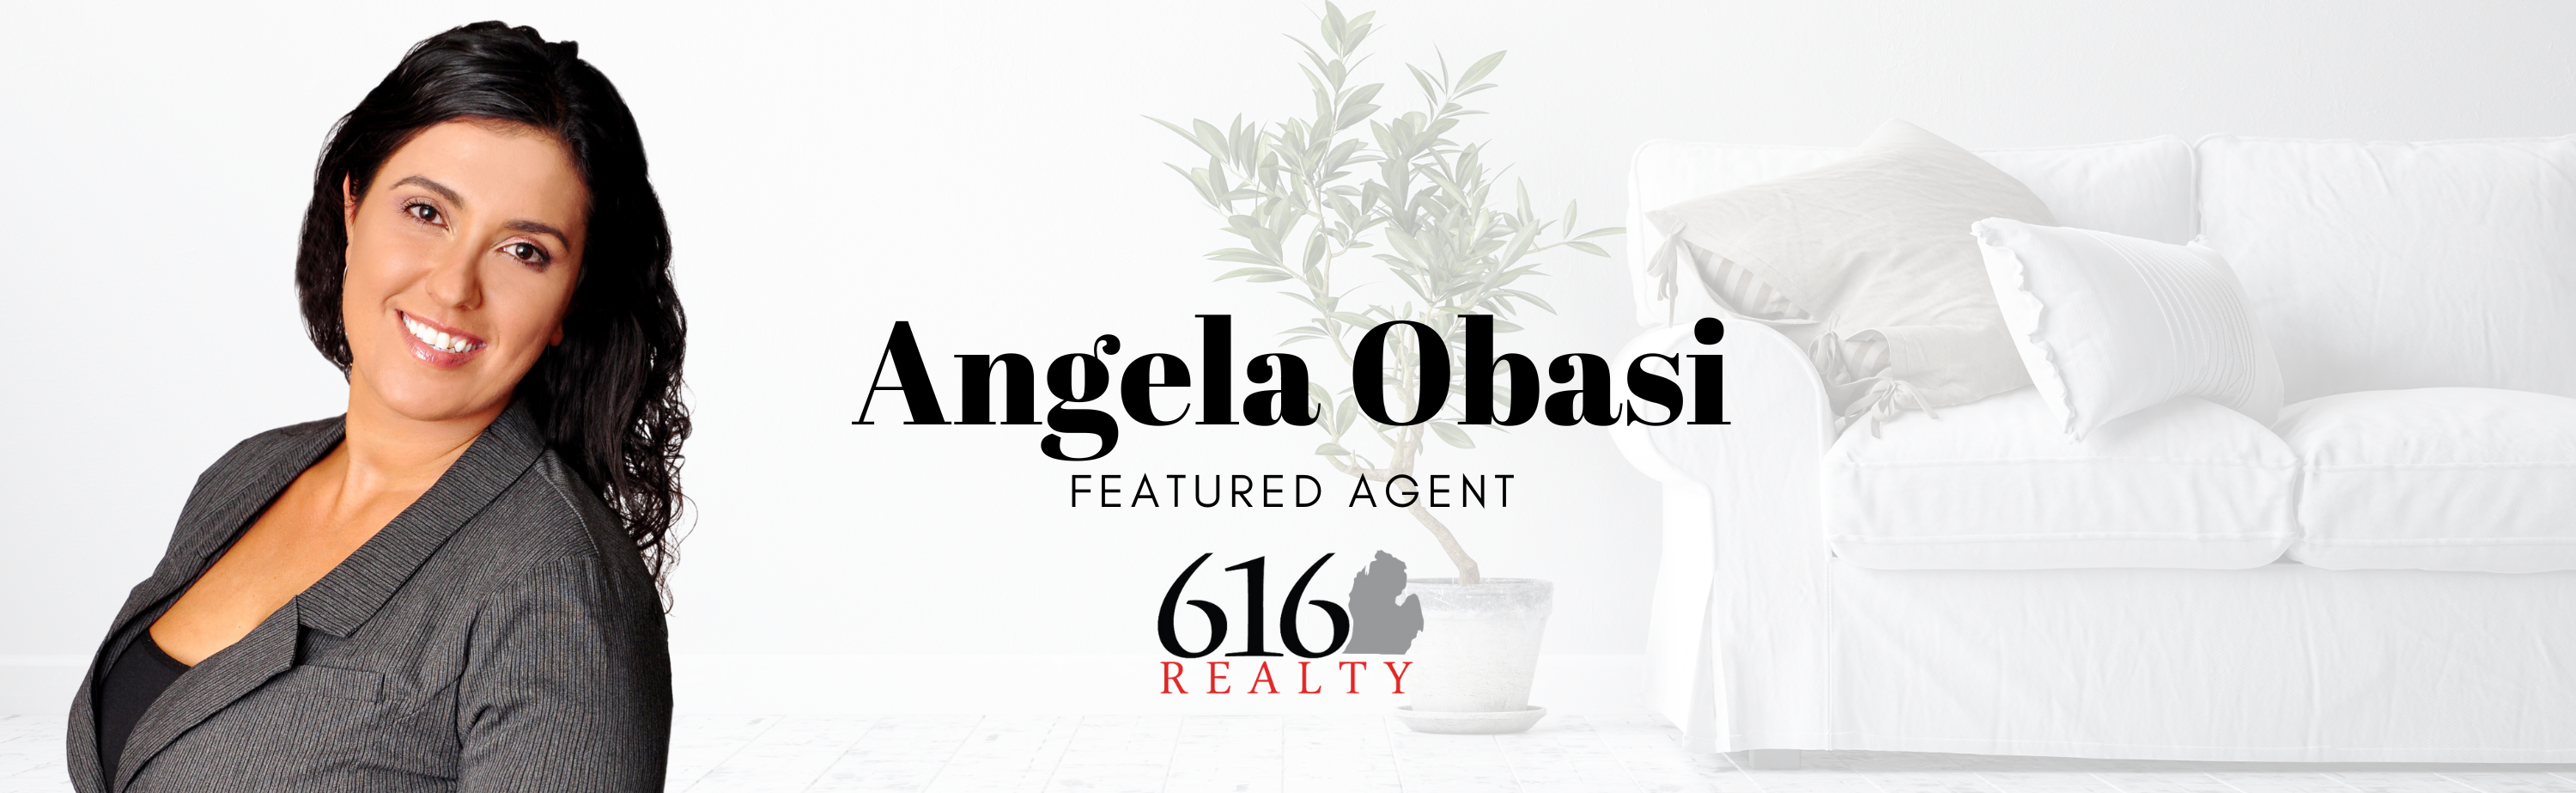 Featured Agent - Angela Obasi